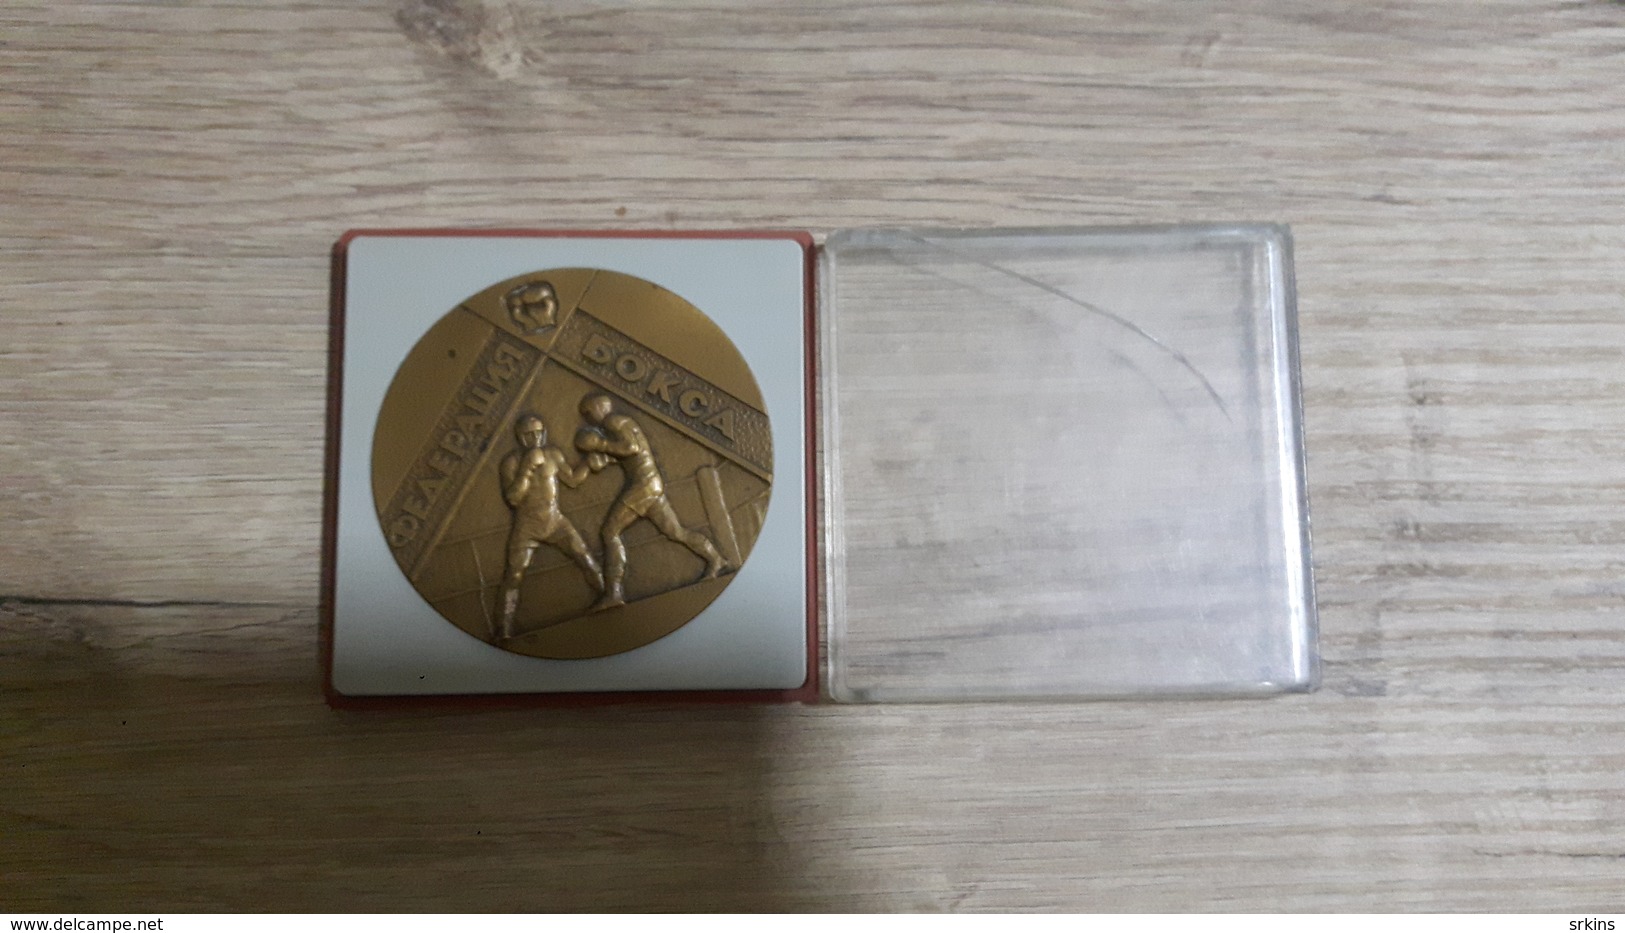 Plaque Boxing Box Leningrad (Saint Petersburg) Federation USSR Russia - Apparel, Souvenirs & Other